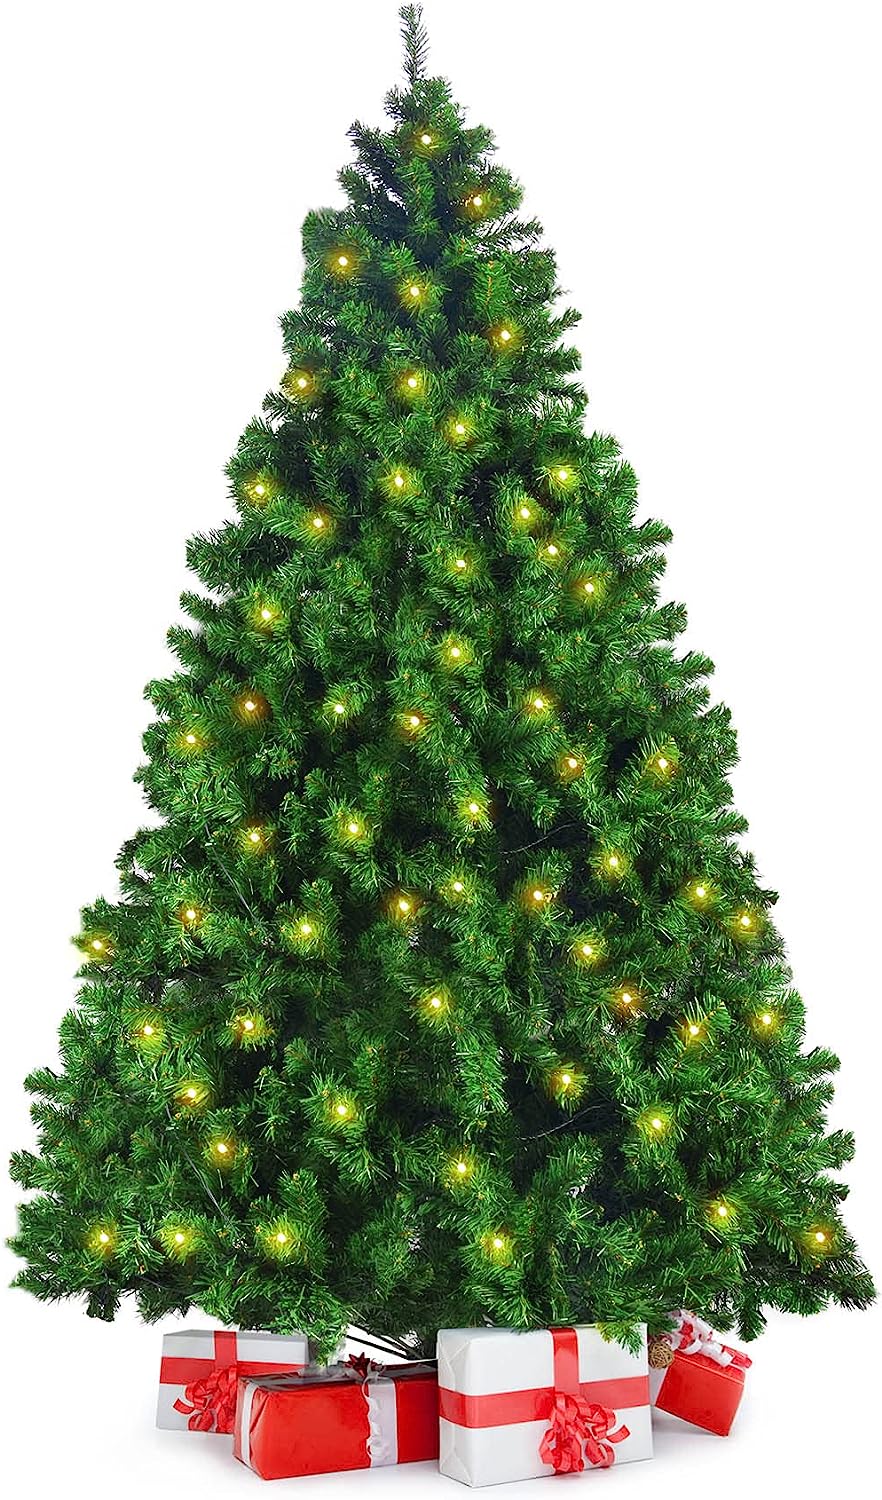 Seeutek 7.5ft Christmas Tree with Lights,Remote [...]